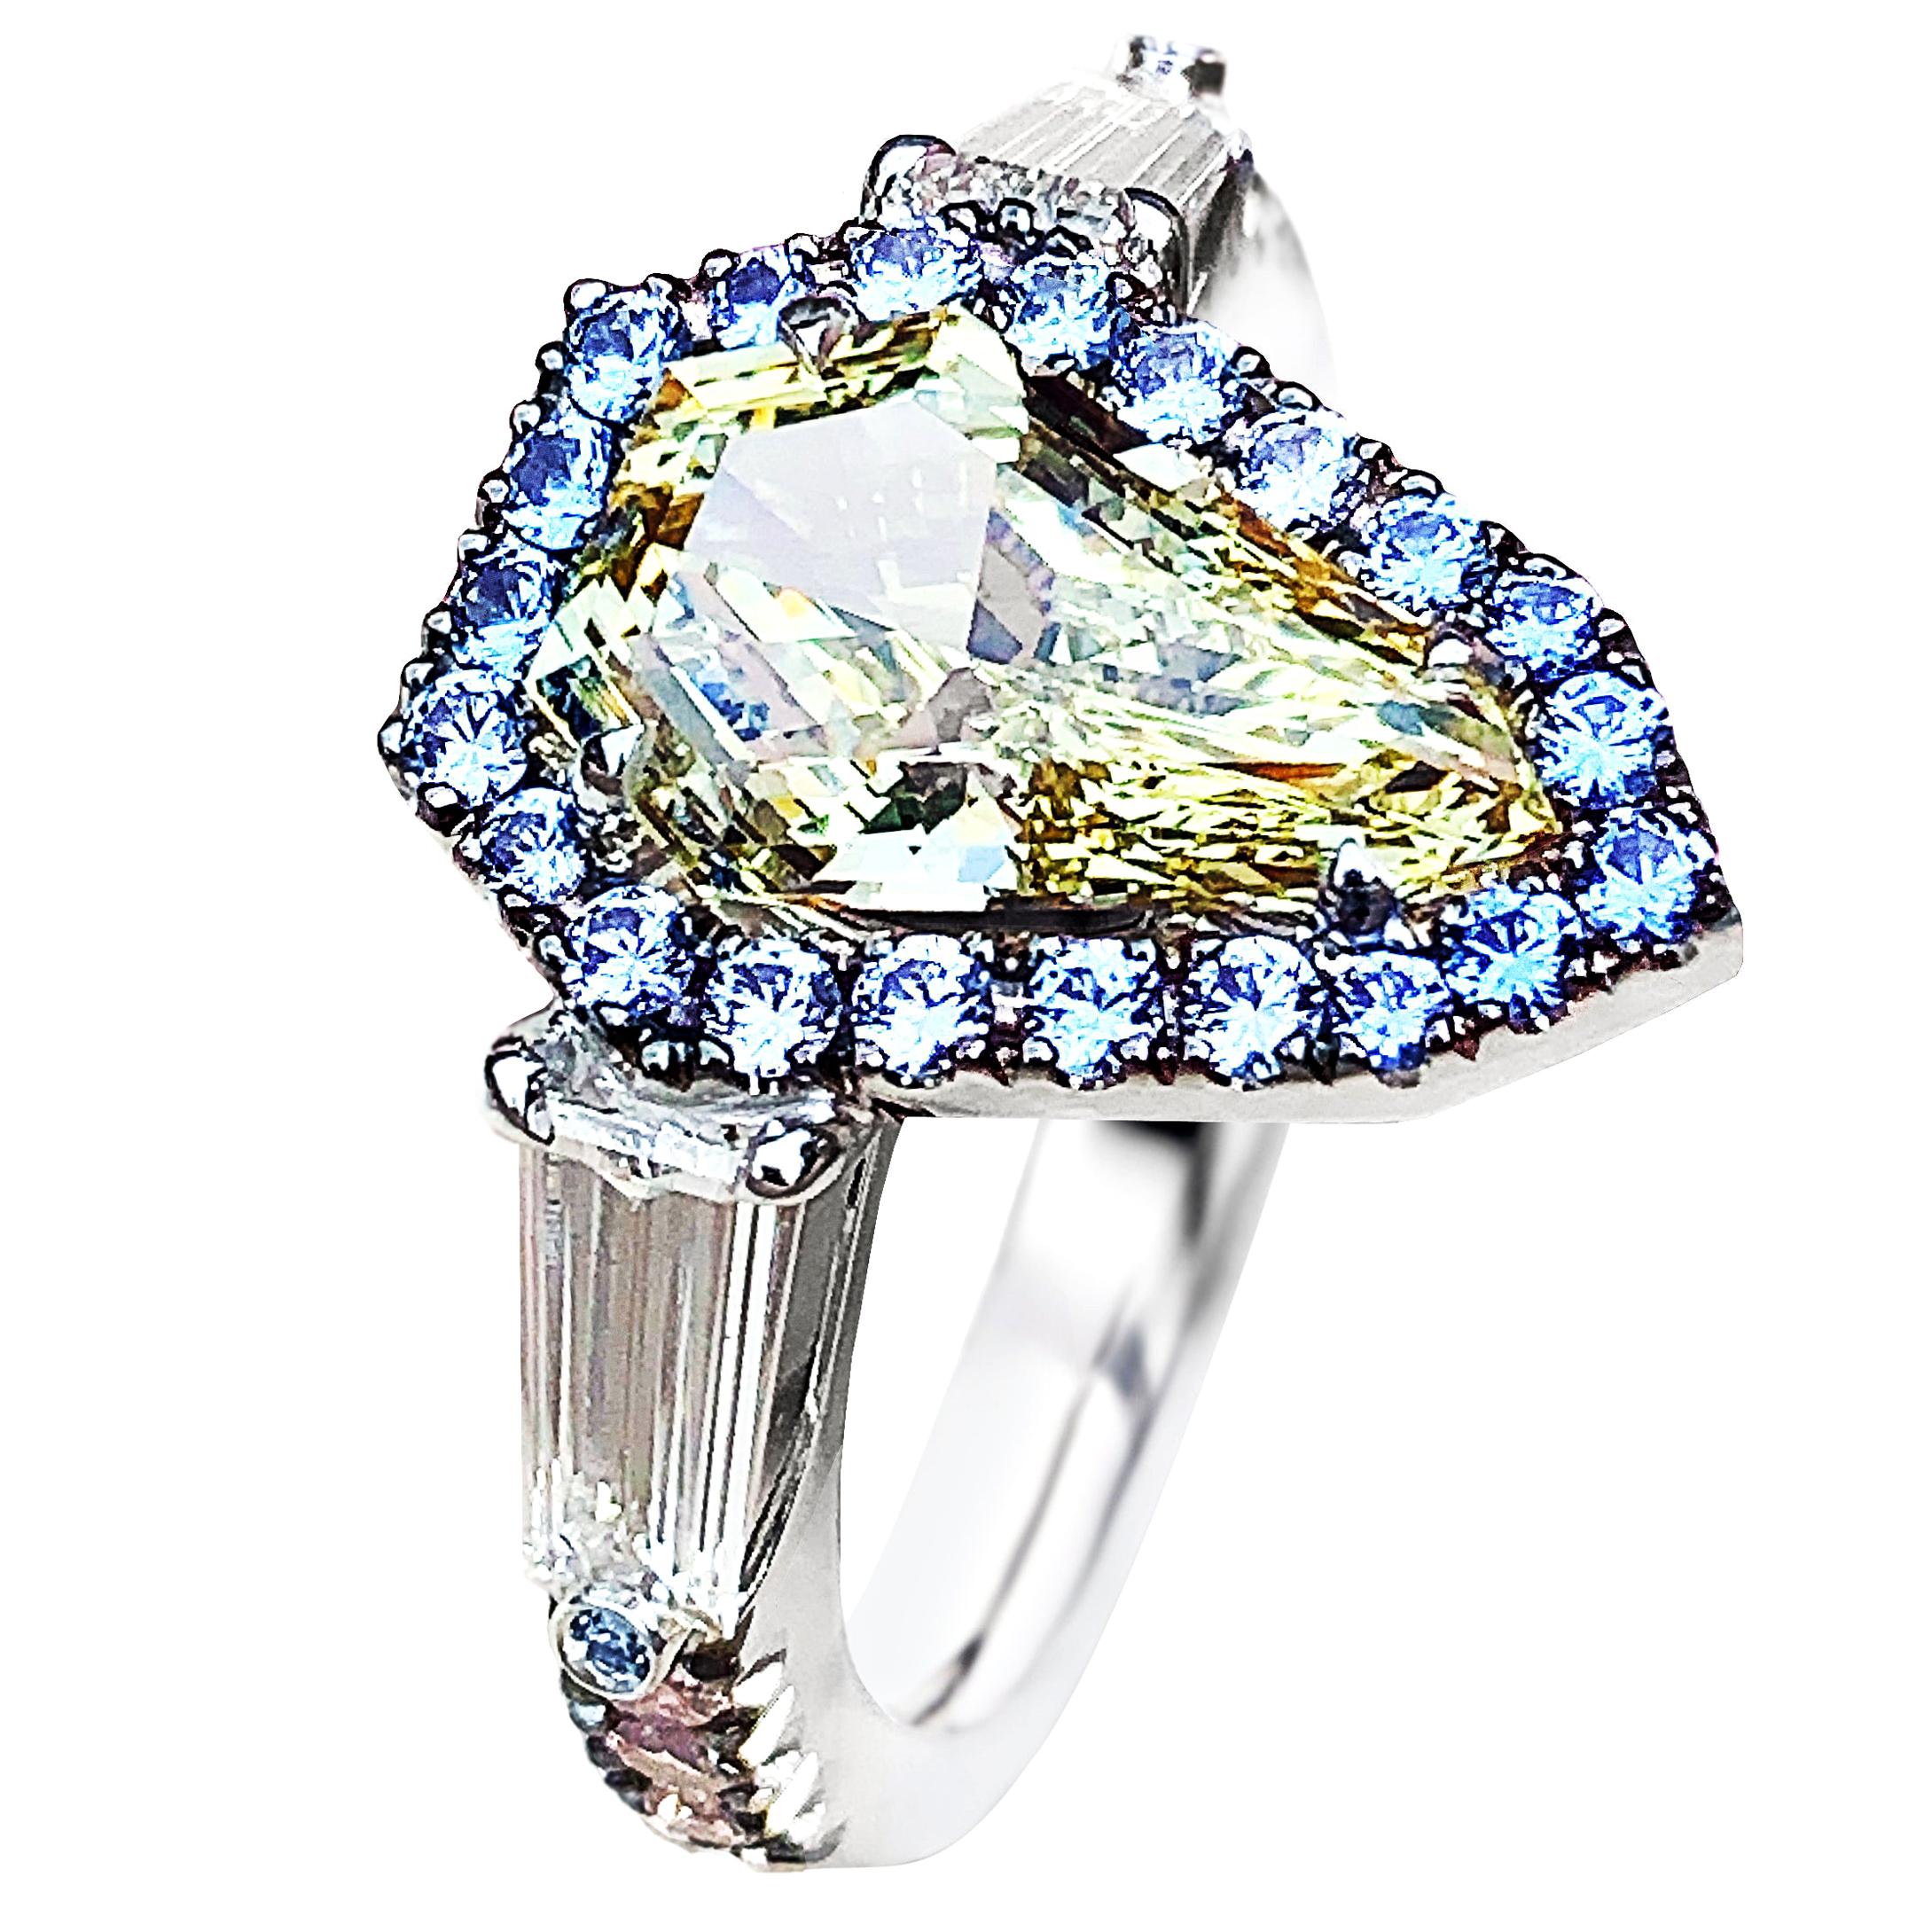 1.43 Carat VVS2 GIA Fancy Yellow Shield Cut Diamond, Unheated Blue Sapphire Ring